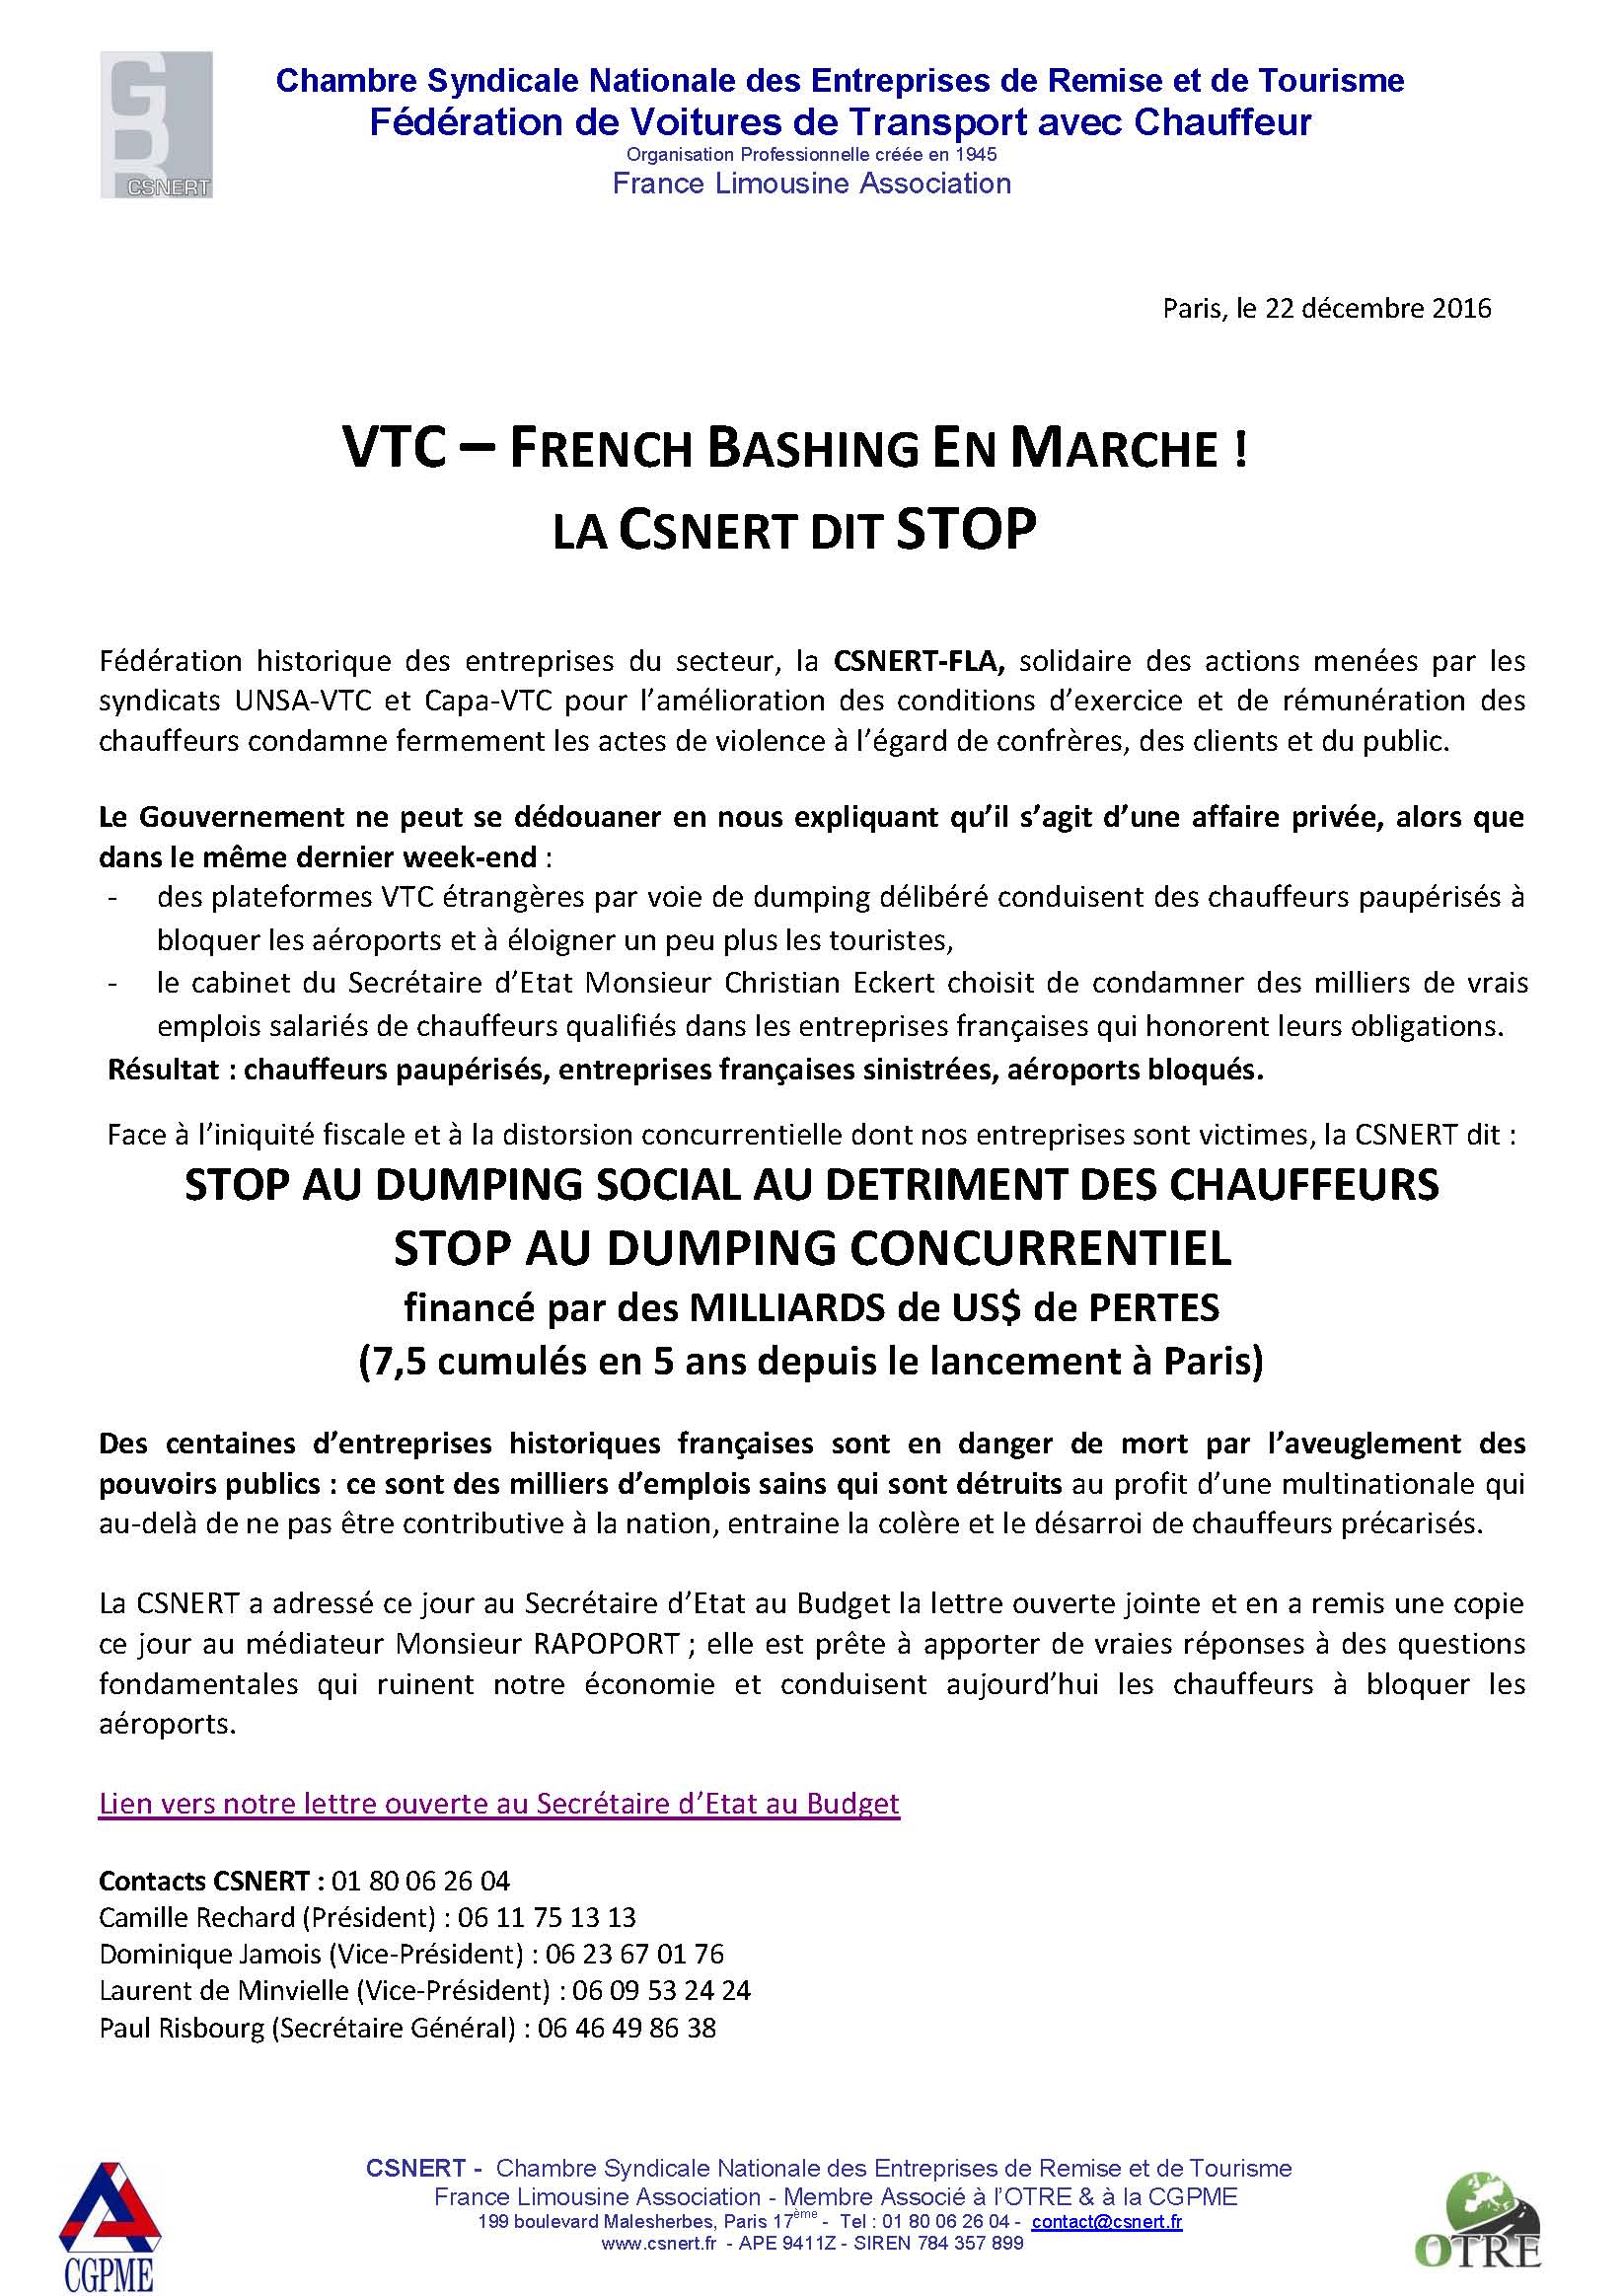 2016-12-22-communique-presse-csnert-vtc-french-bashing